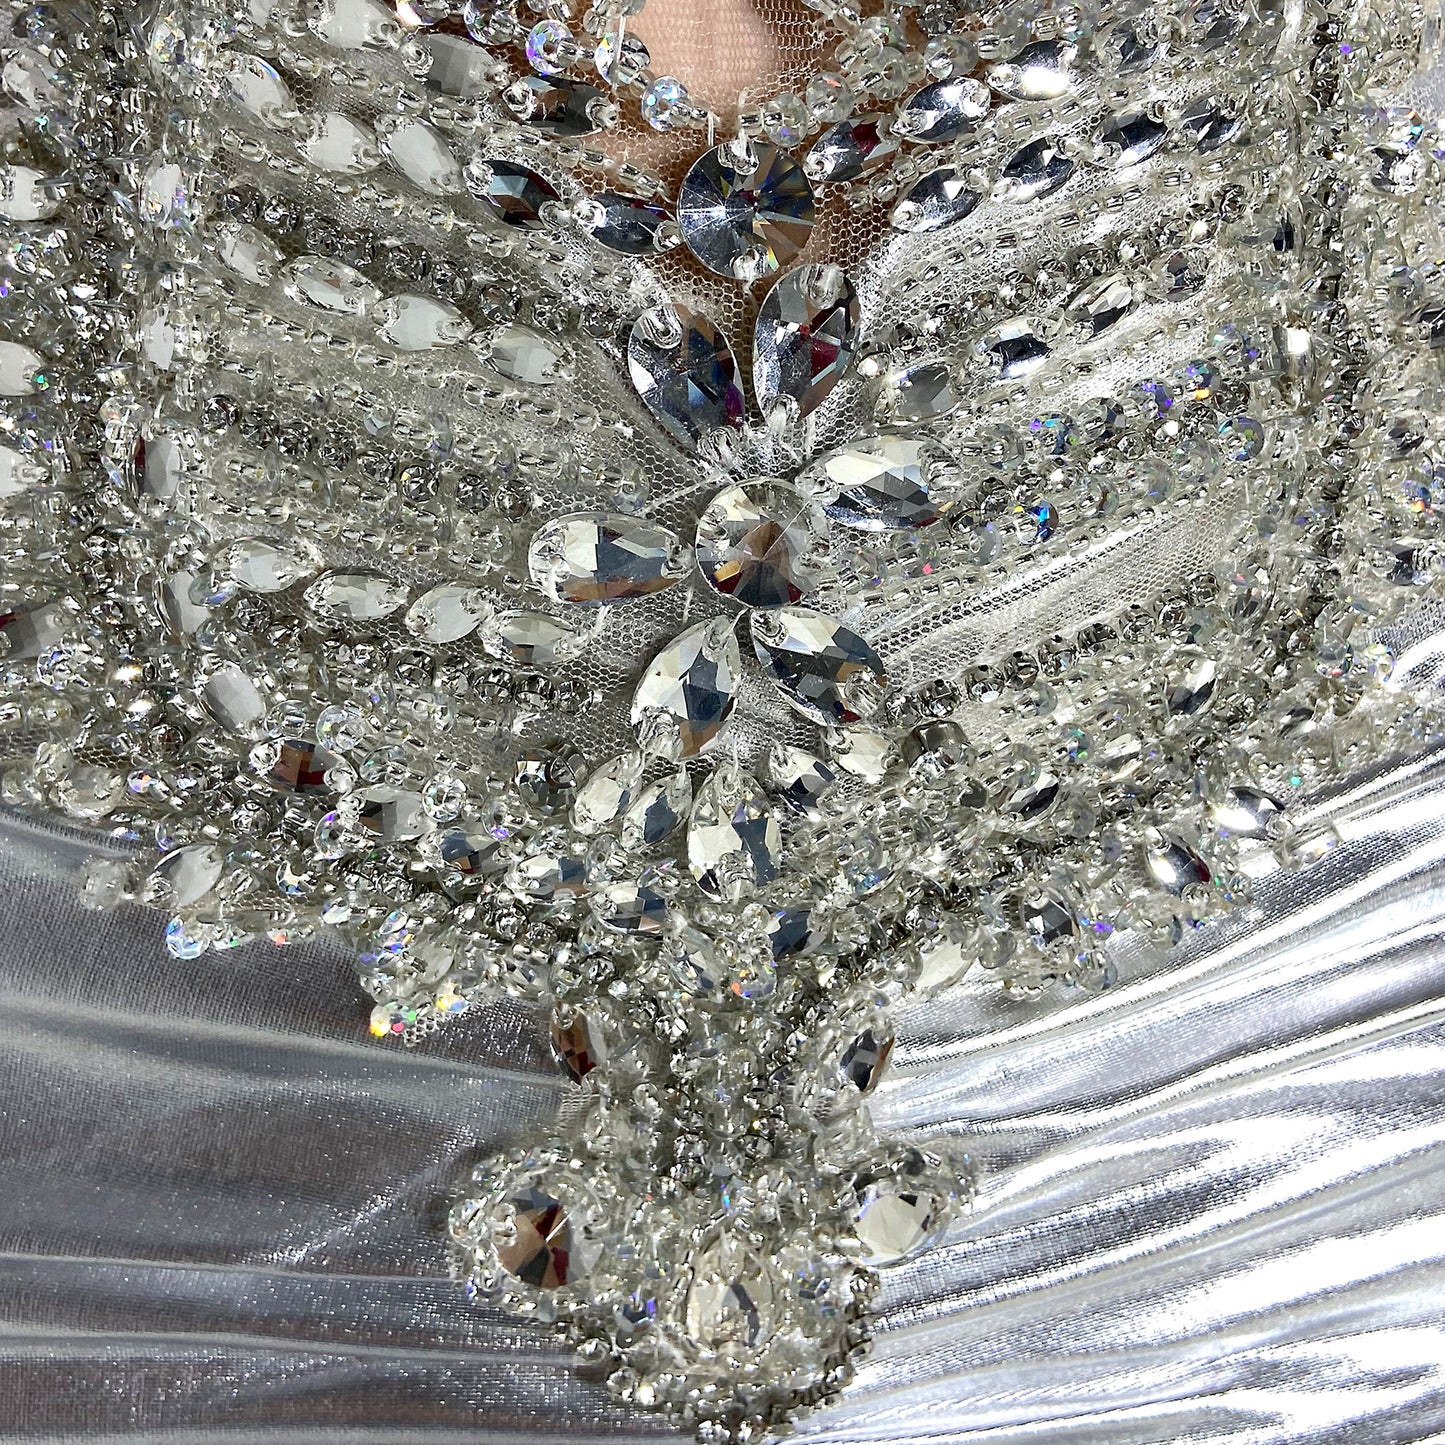 Bryn Beaded Metallic Rhinestone Mini Dress